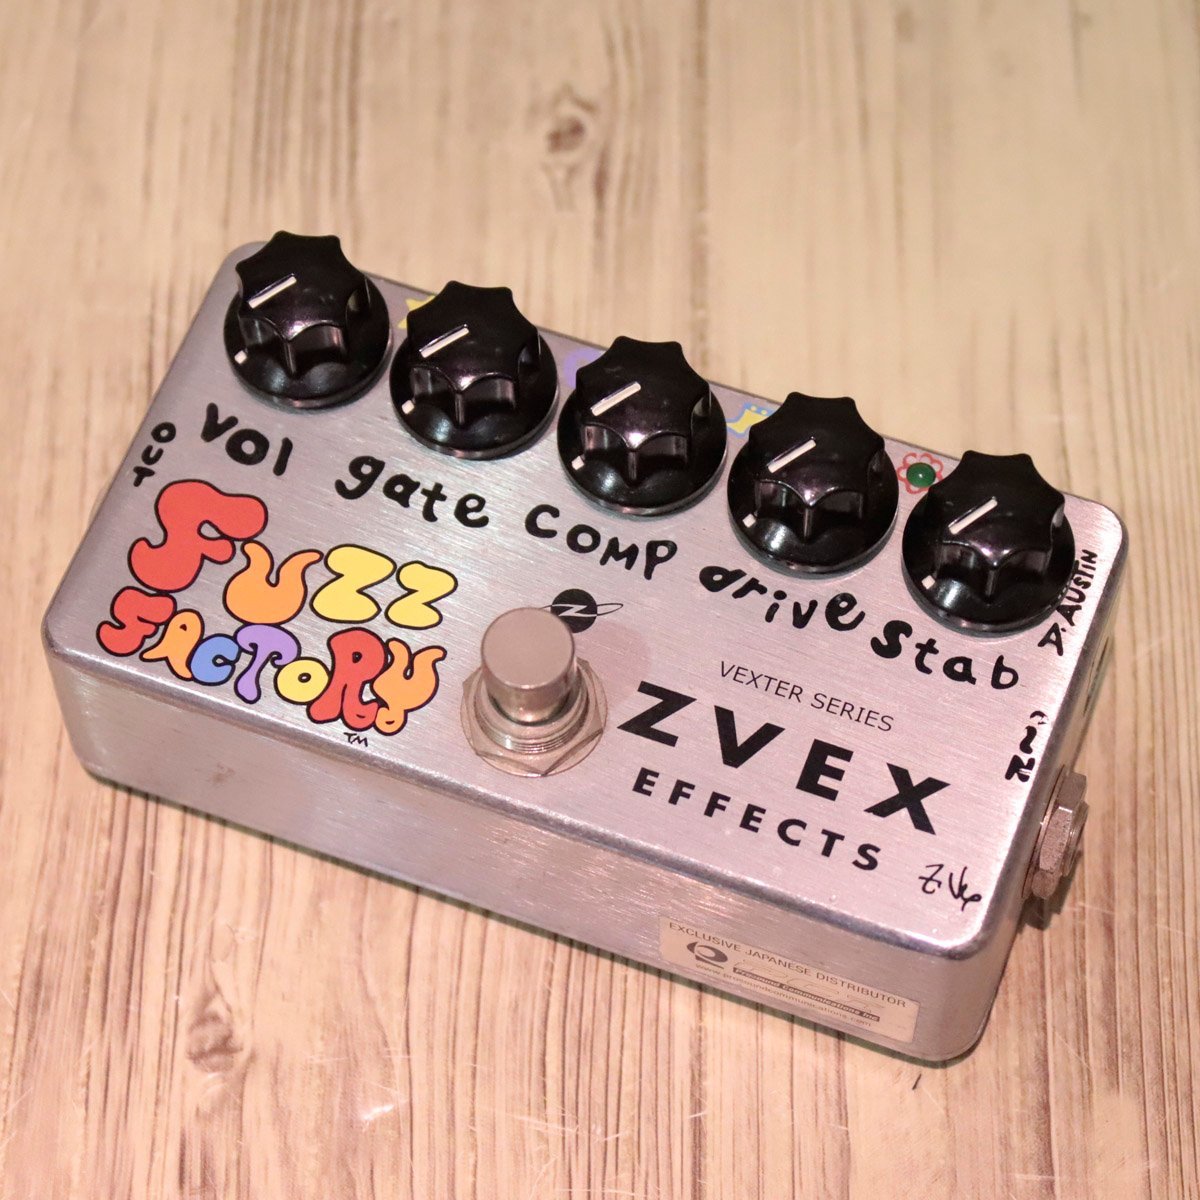 Zvex effects Fuzz factory vexter series楽器・機材 - ギター